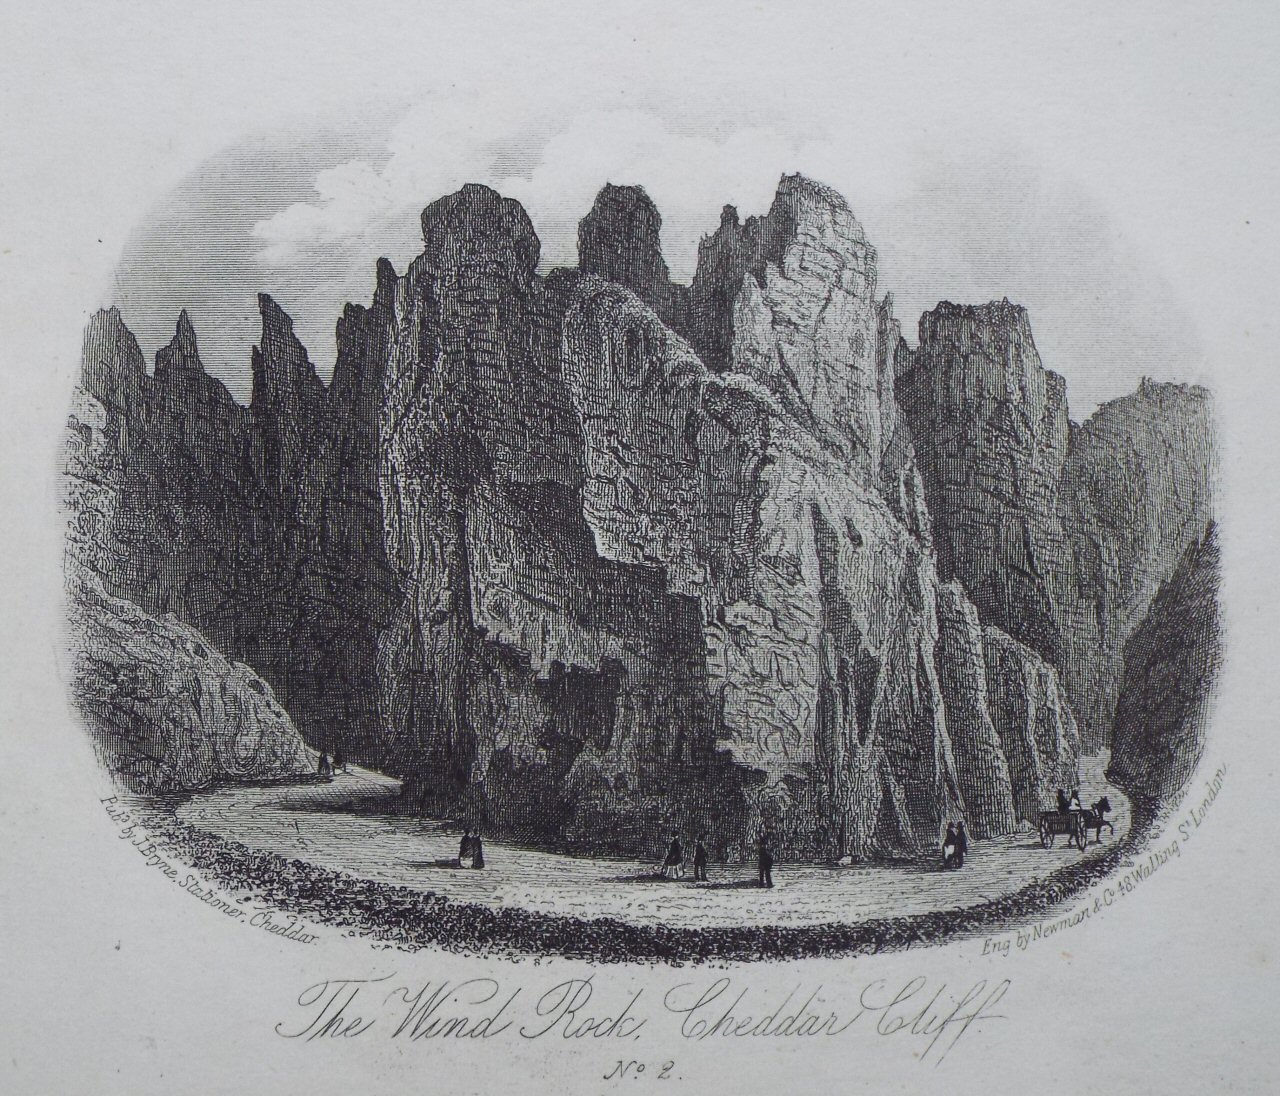 Steel Vignette - The Wind Rock, Cheddar Cliffs No. 2 - Newman